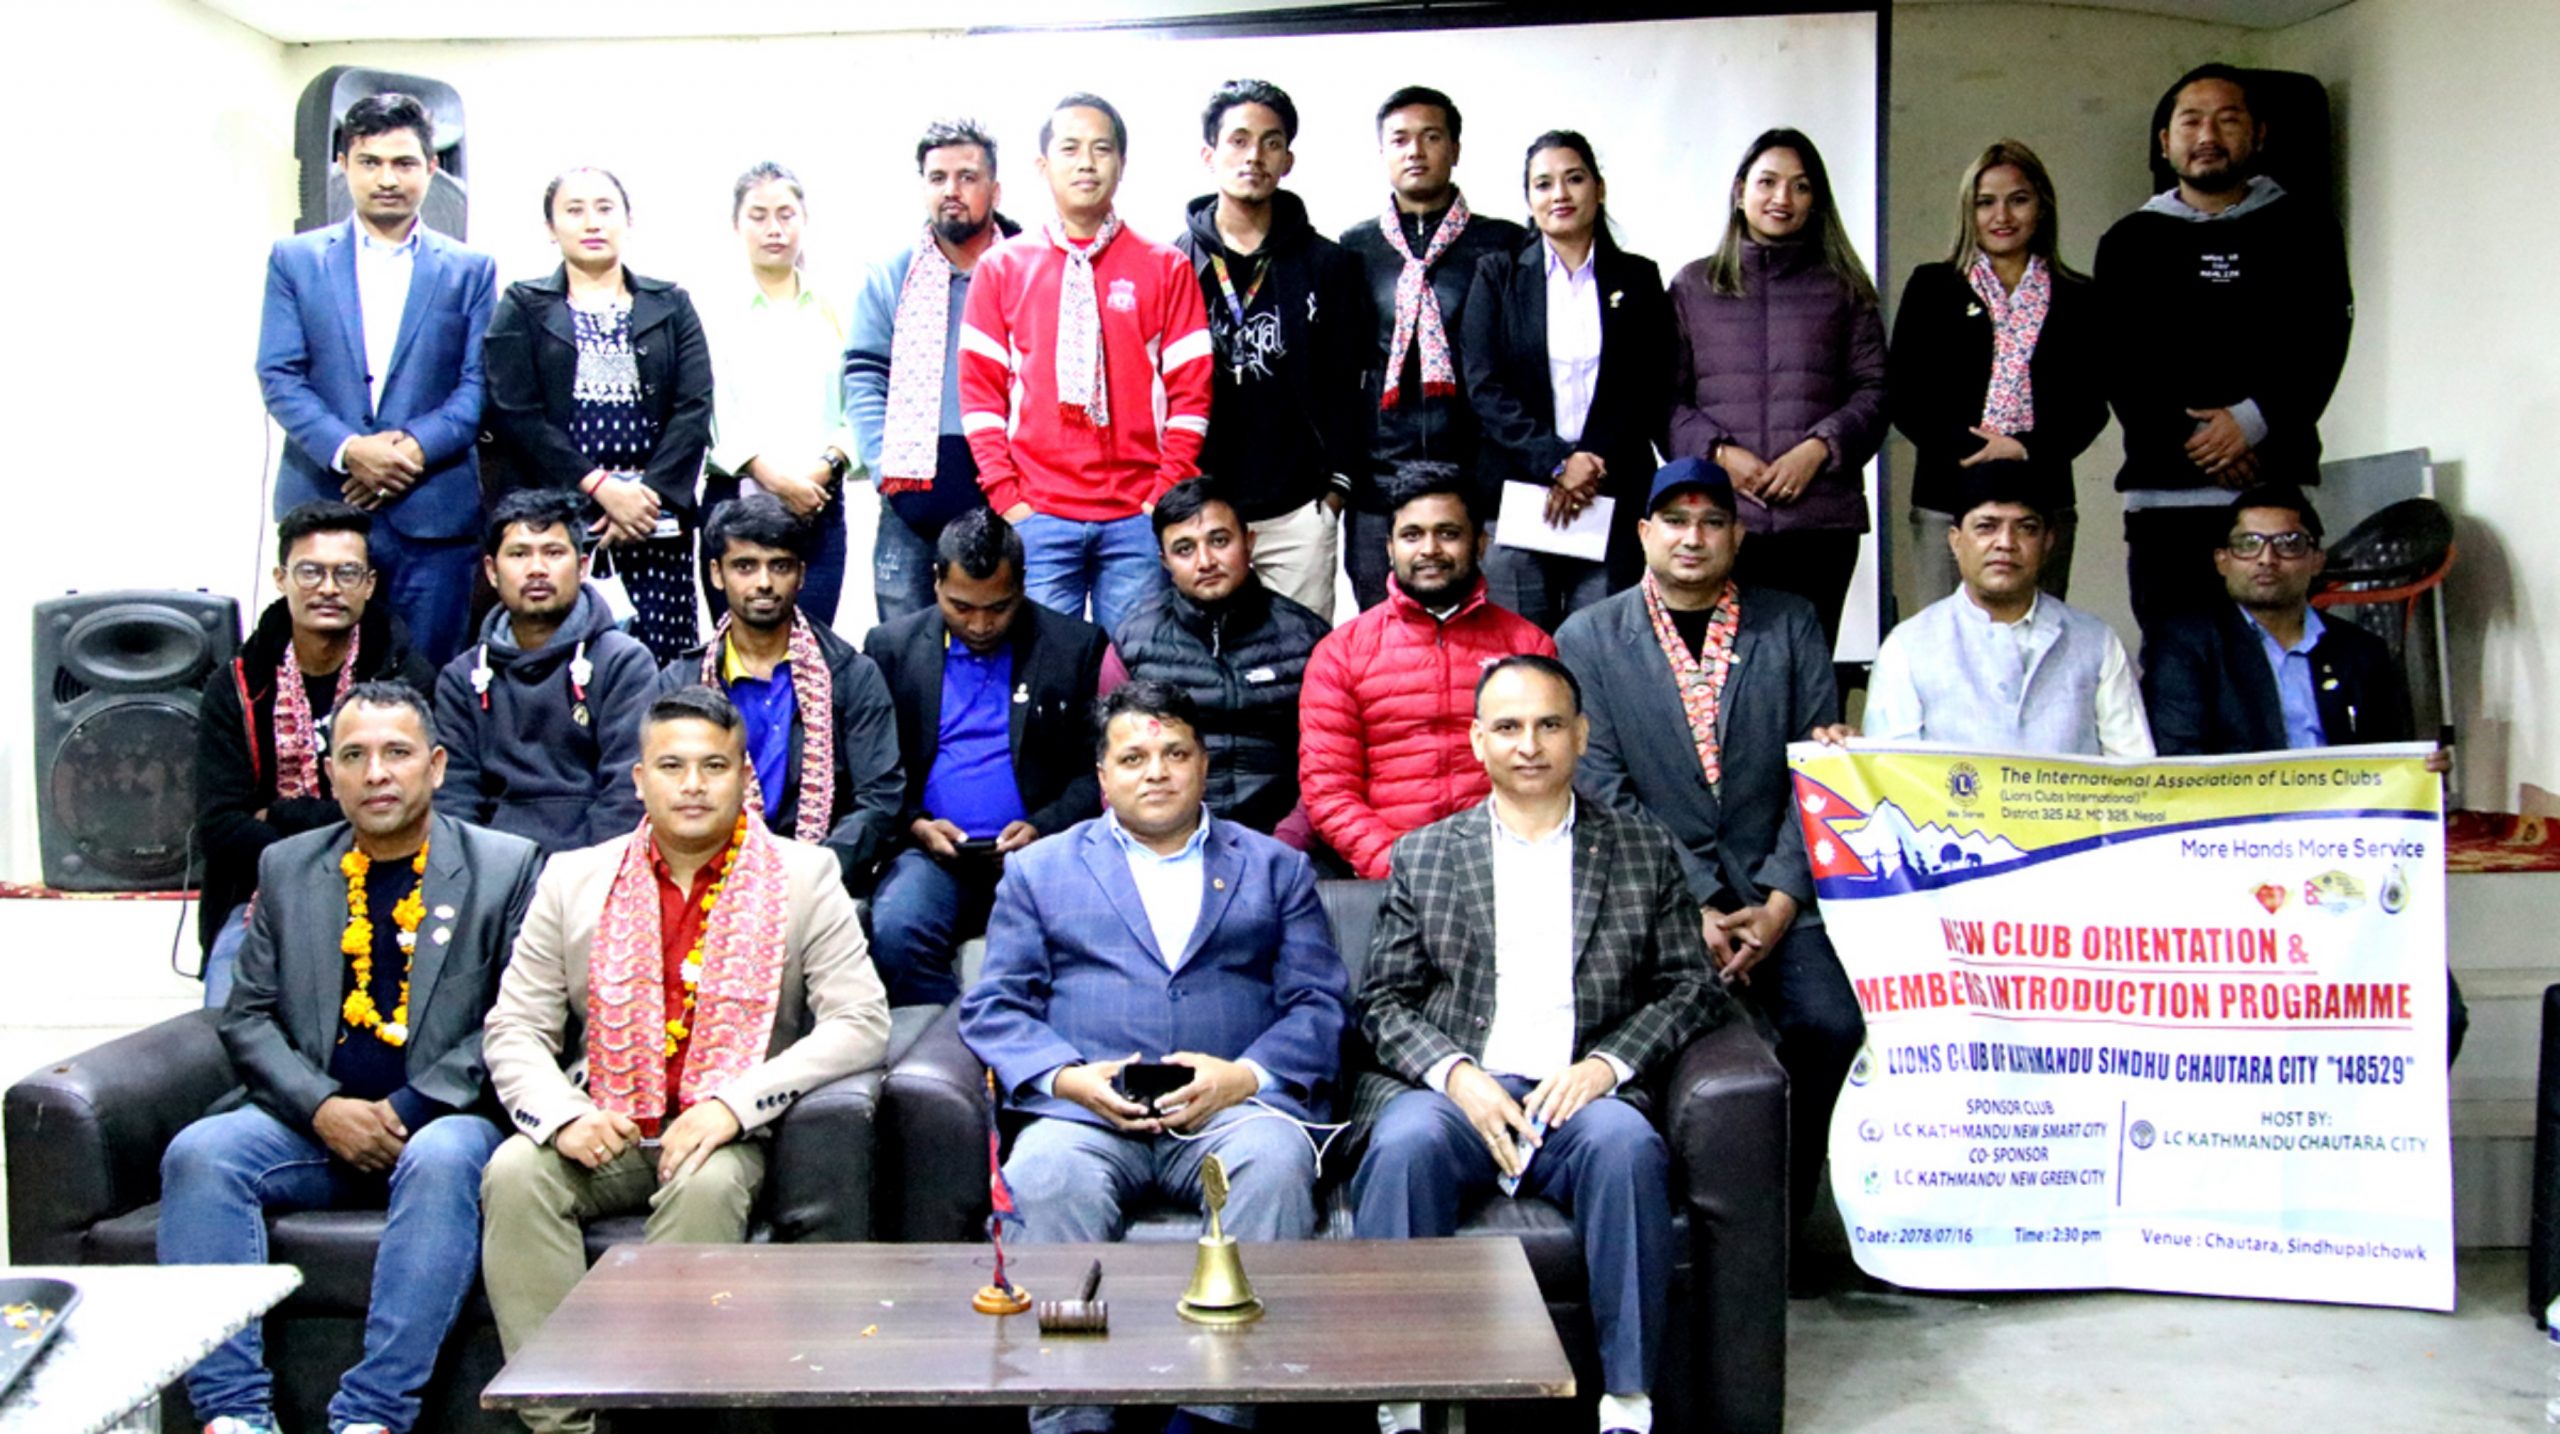 Lions Club of Kathmandu Sindhu Chautara City established, Shrestha as president